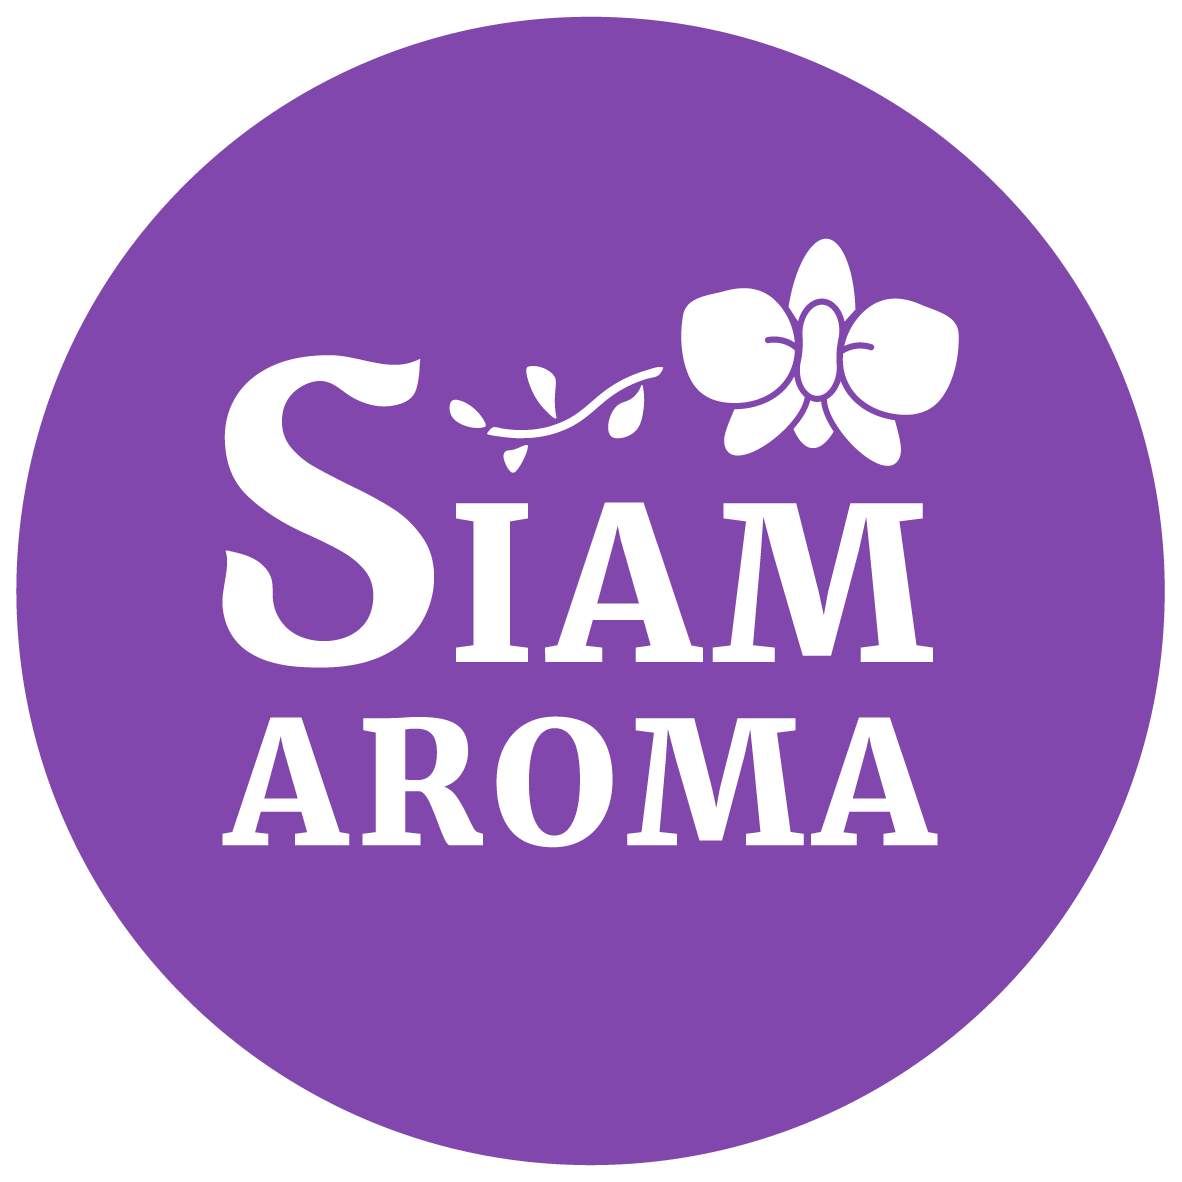 Siam Aroma Co.,ltd